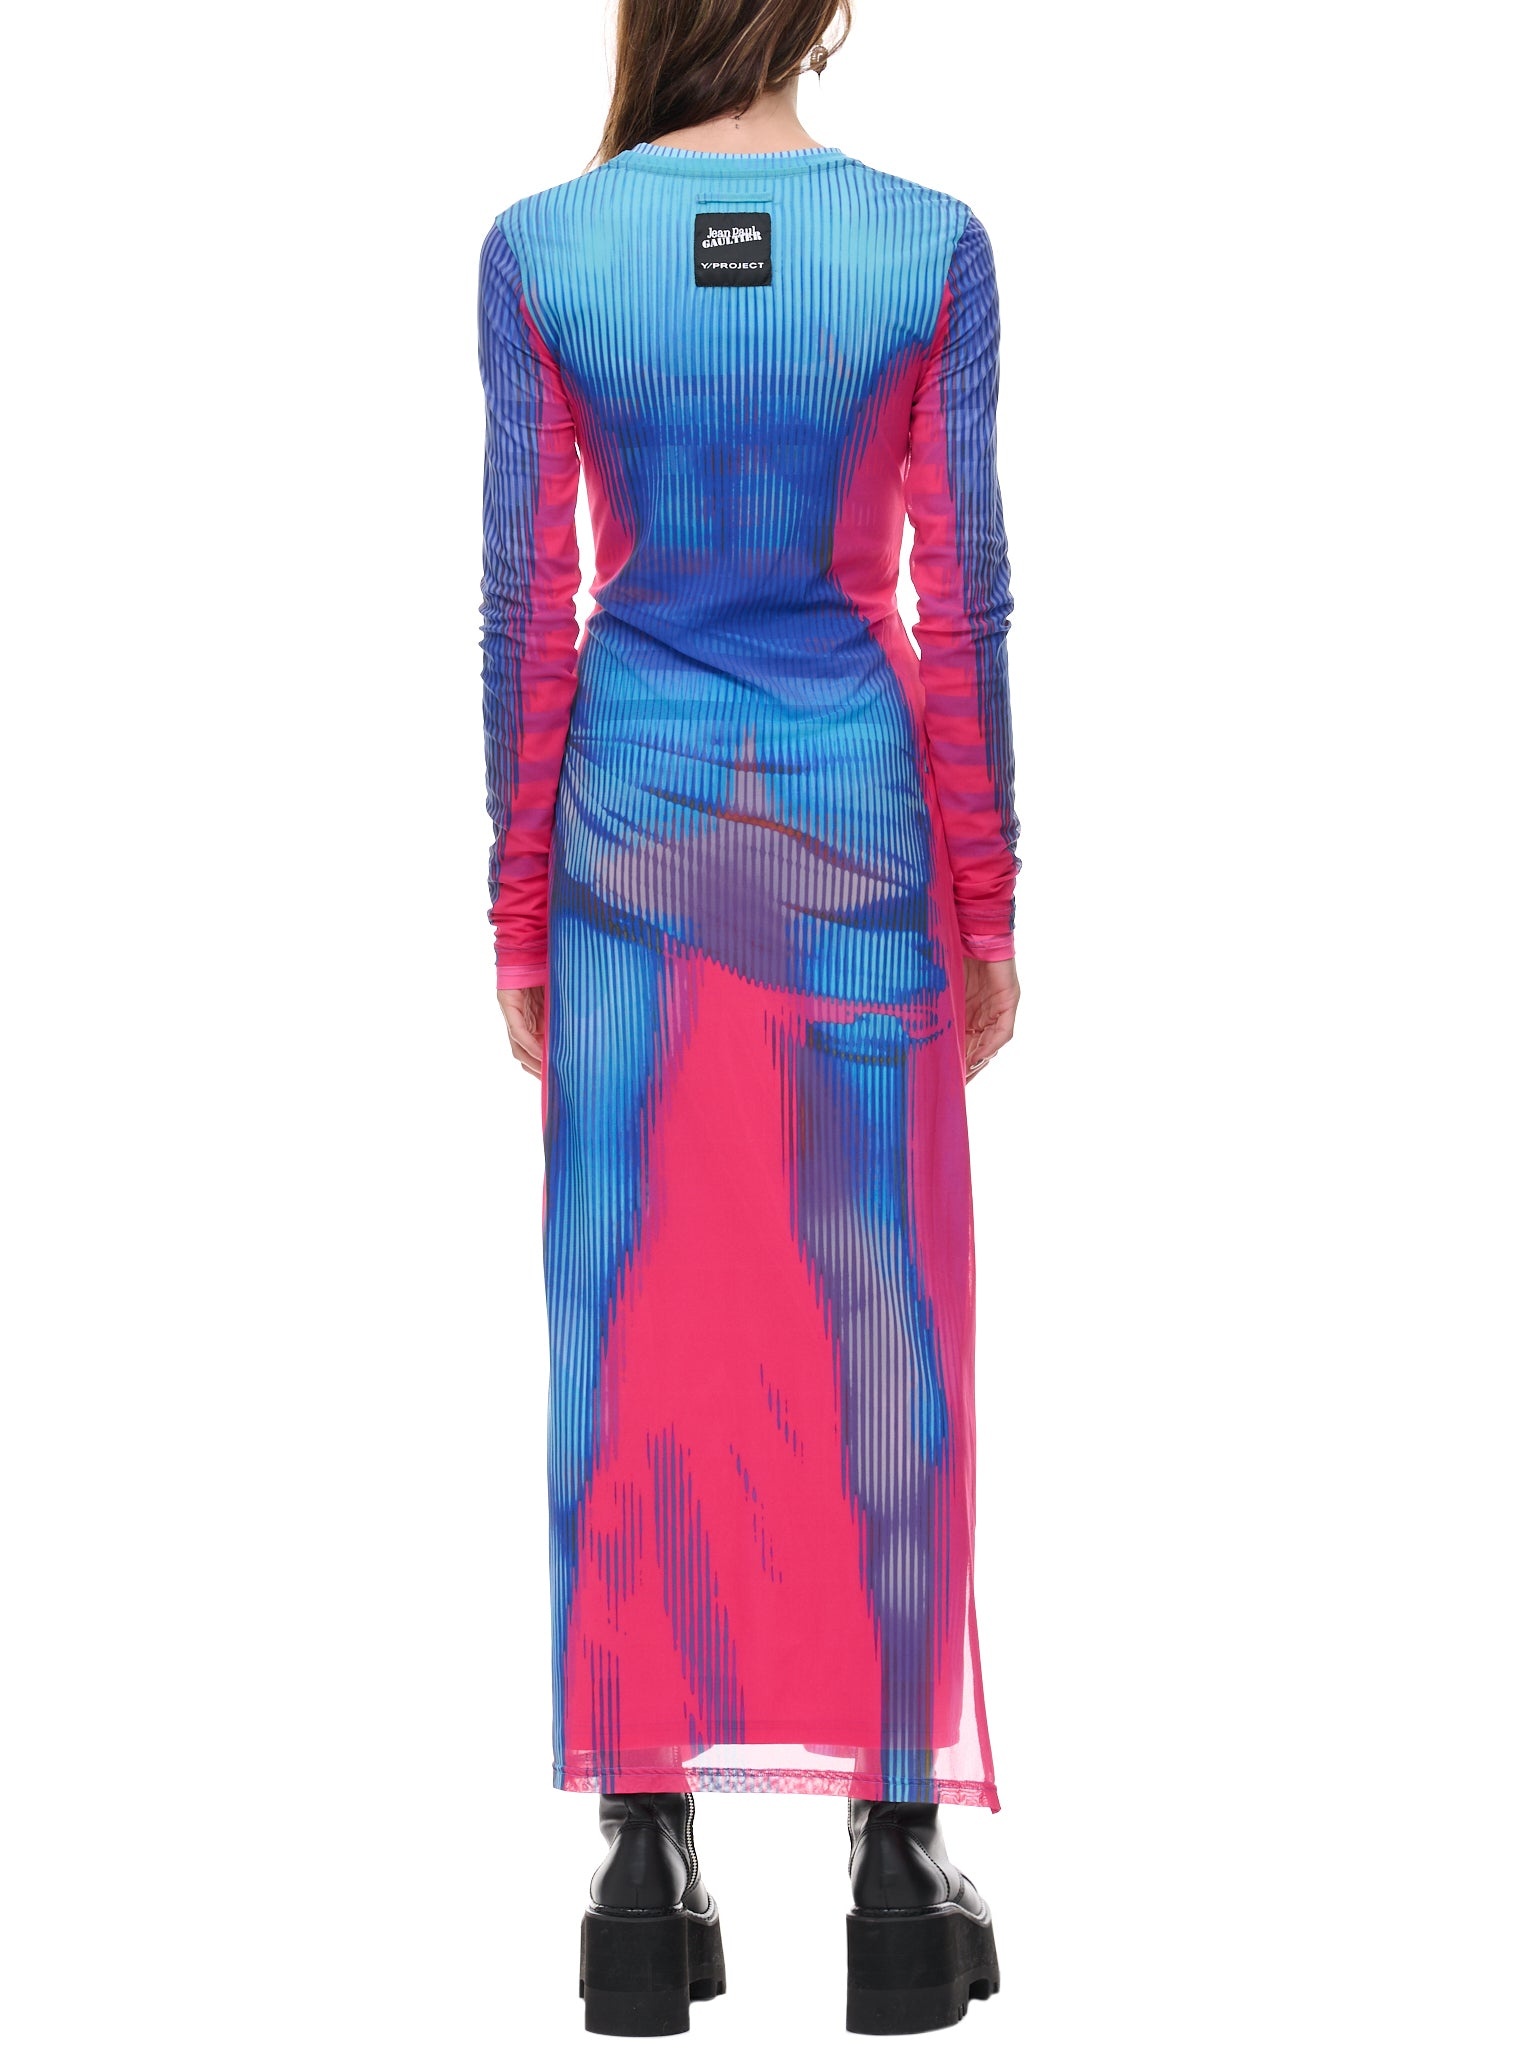 Pink & Blue Body Morph Dress - 3